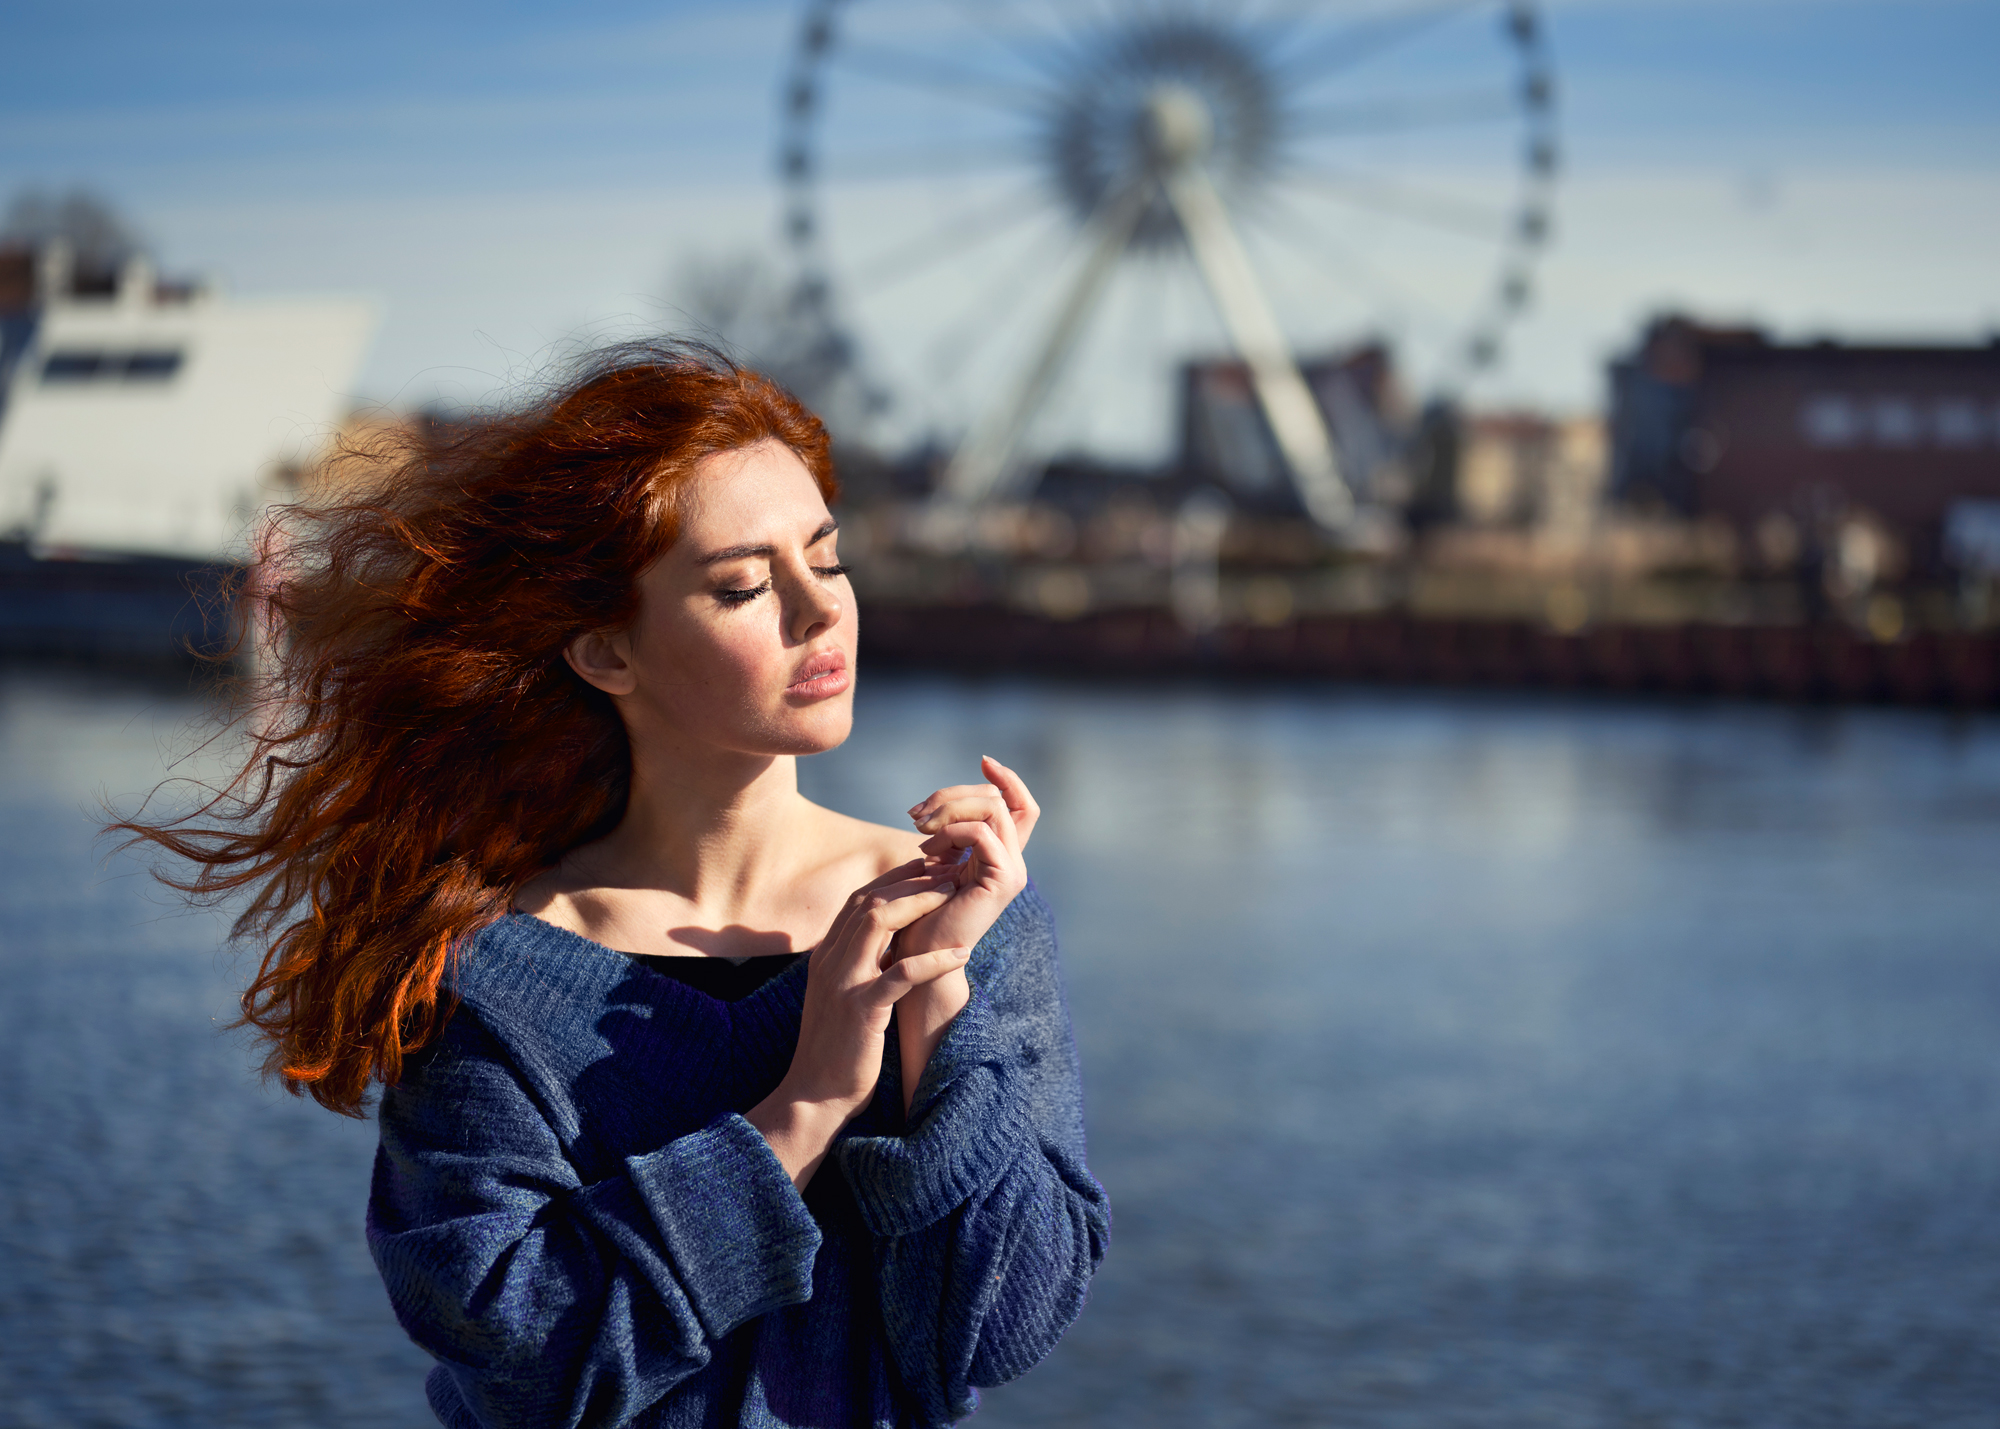 Women Model Redhead Long Hair Women Outdoors Water Closed Eyes Freckles Sweater River Ferris Wheel 2000x1429